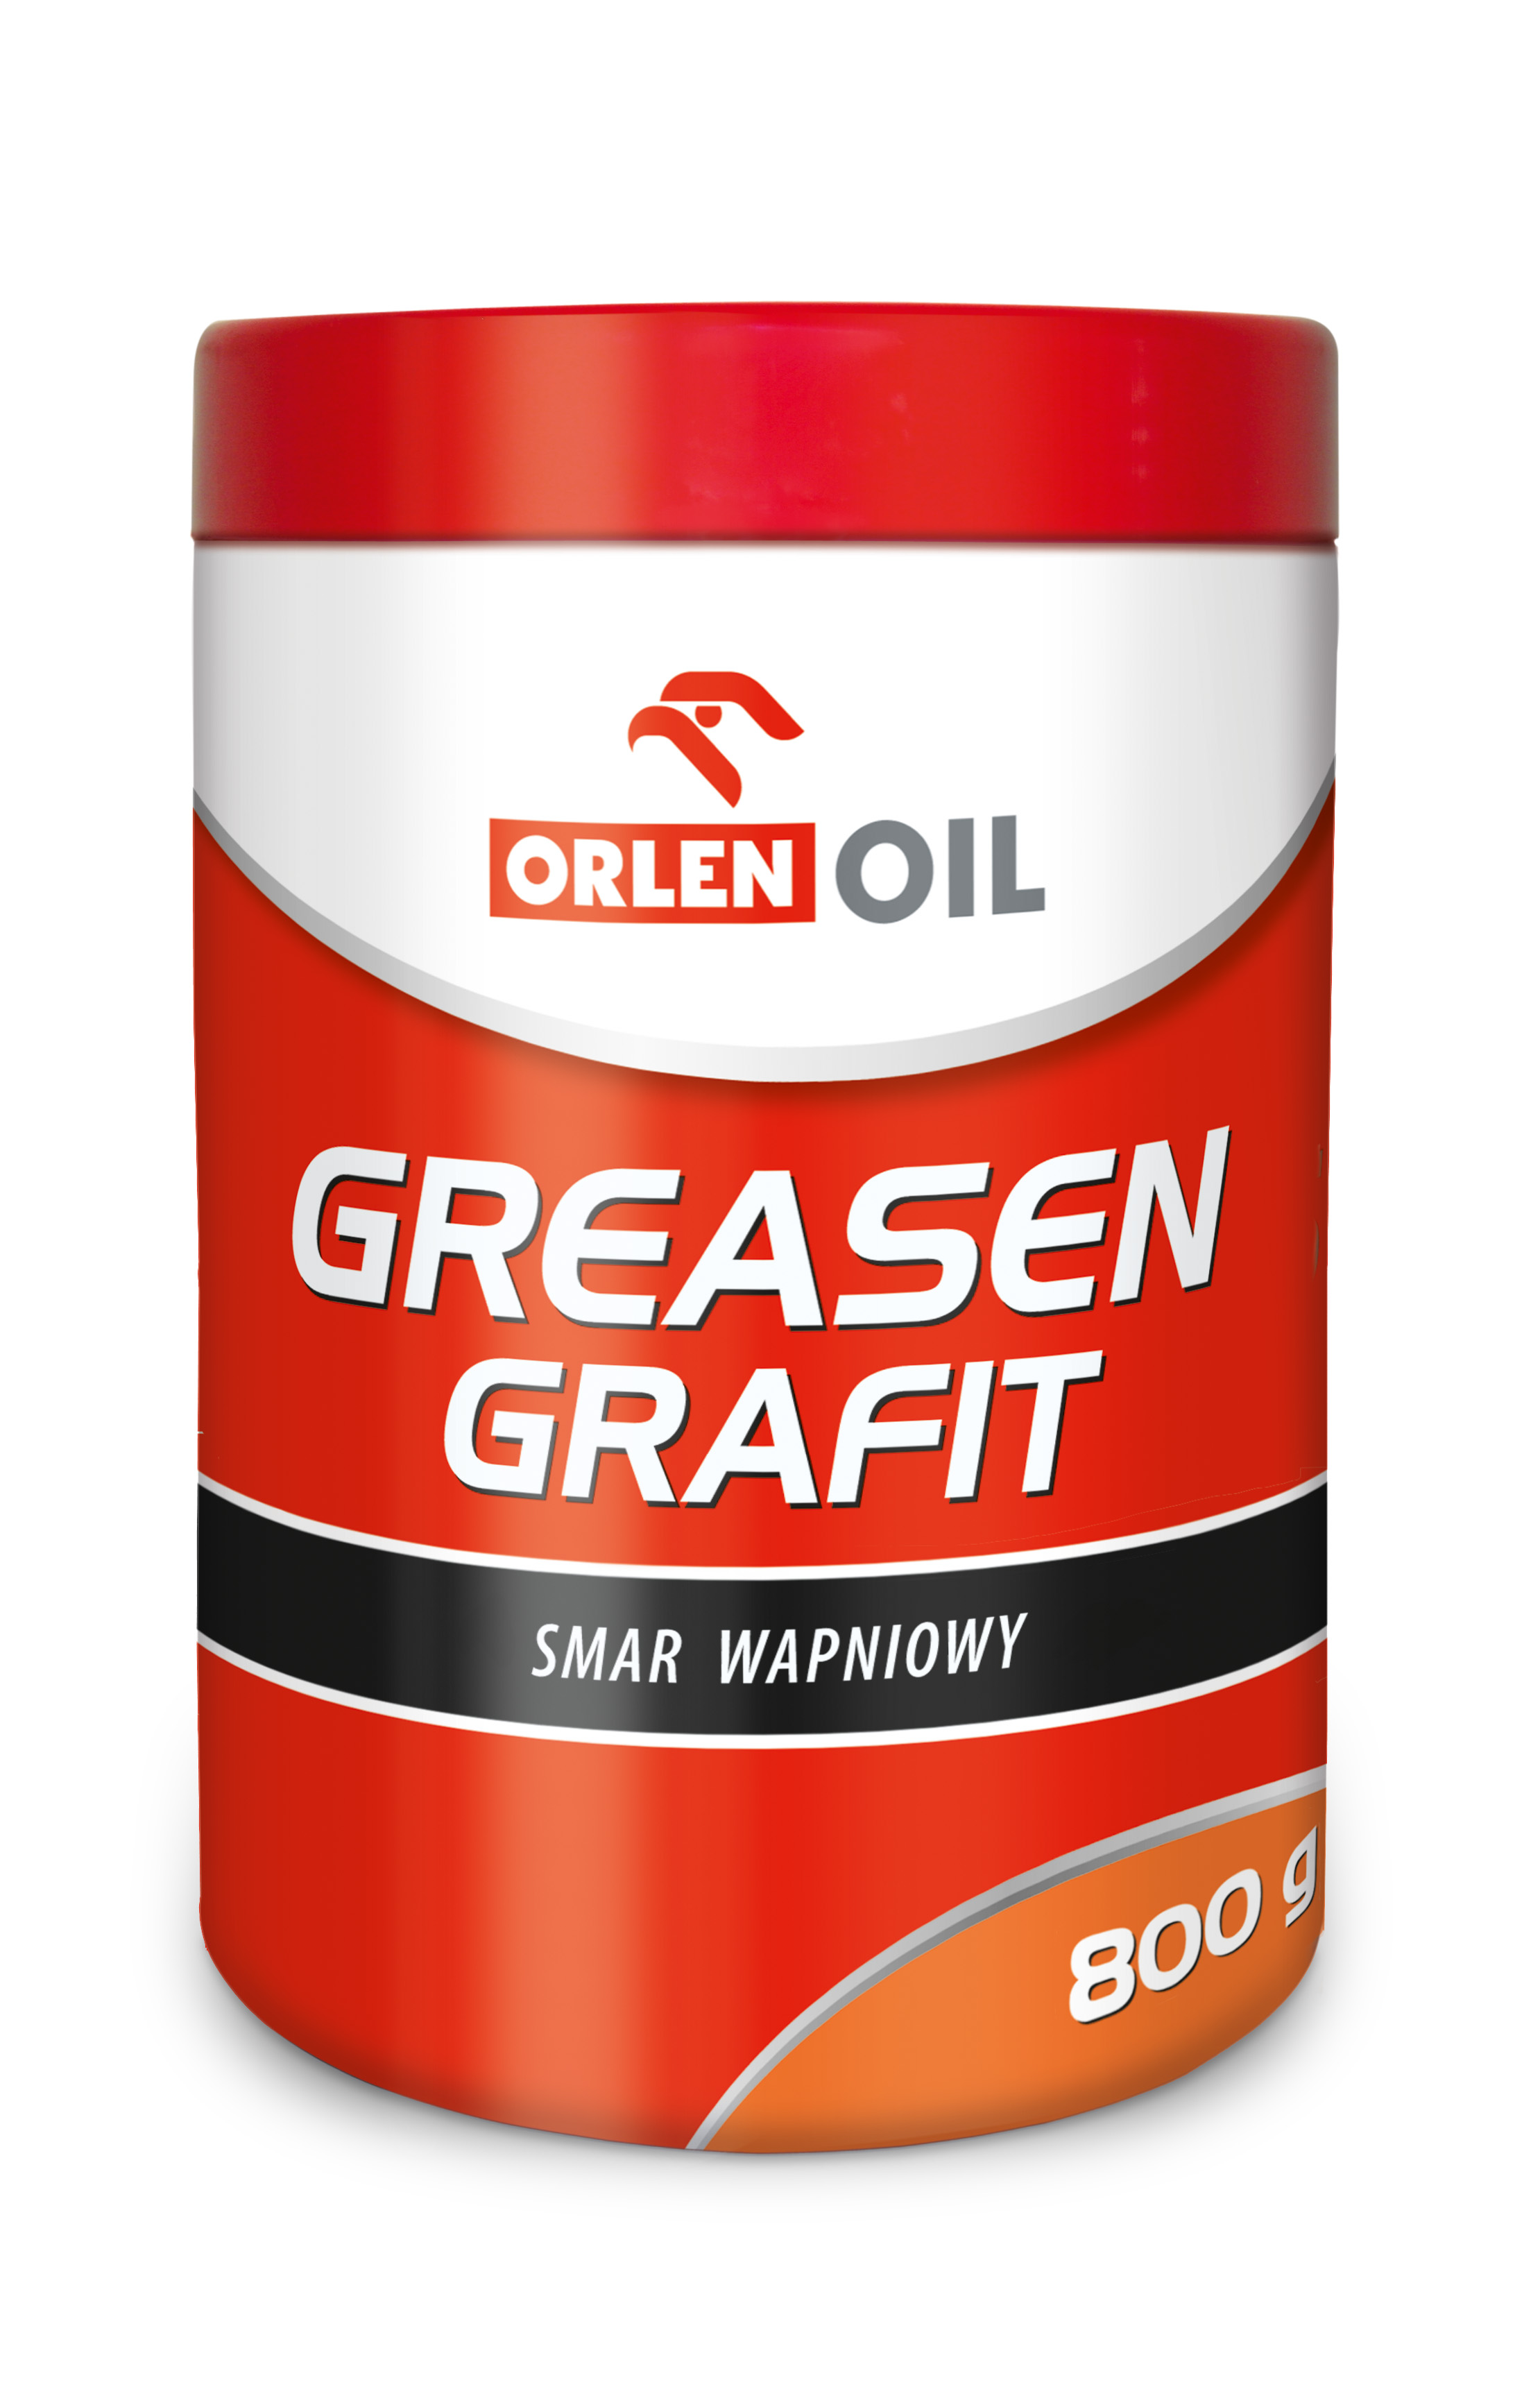 Orlen Oil Greasen Grafit